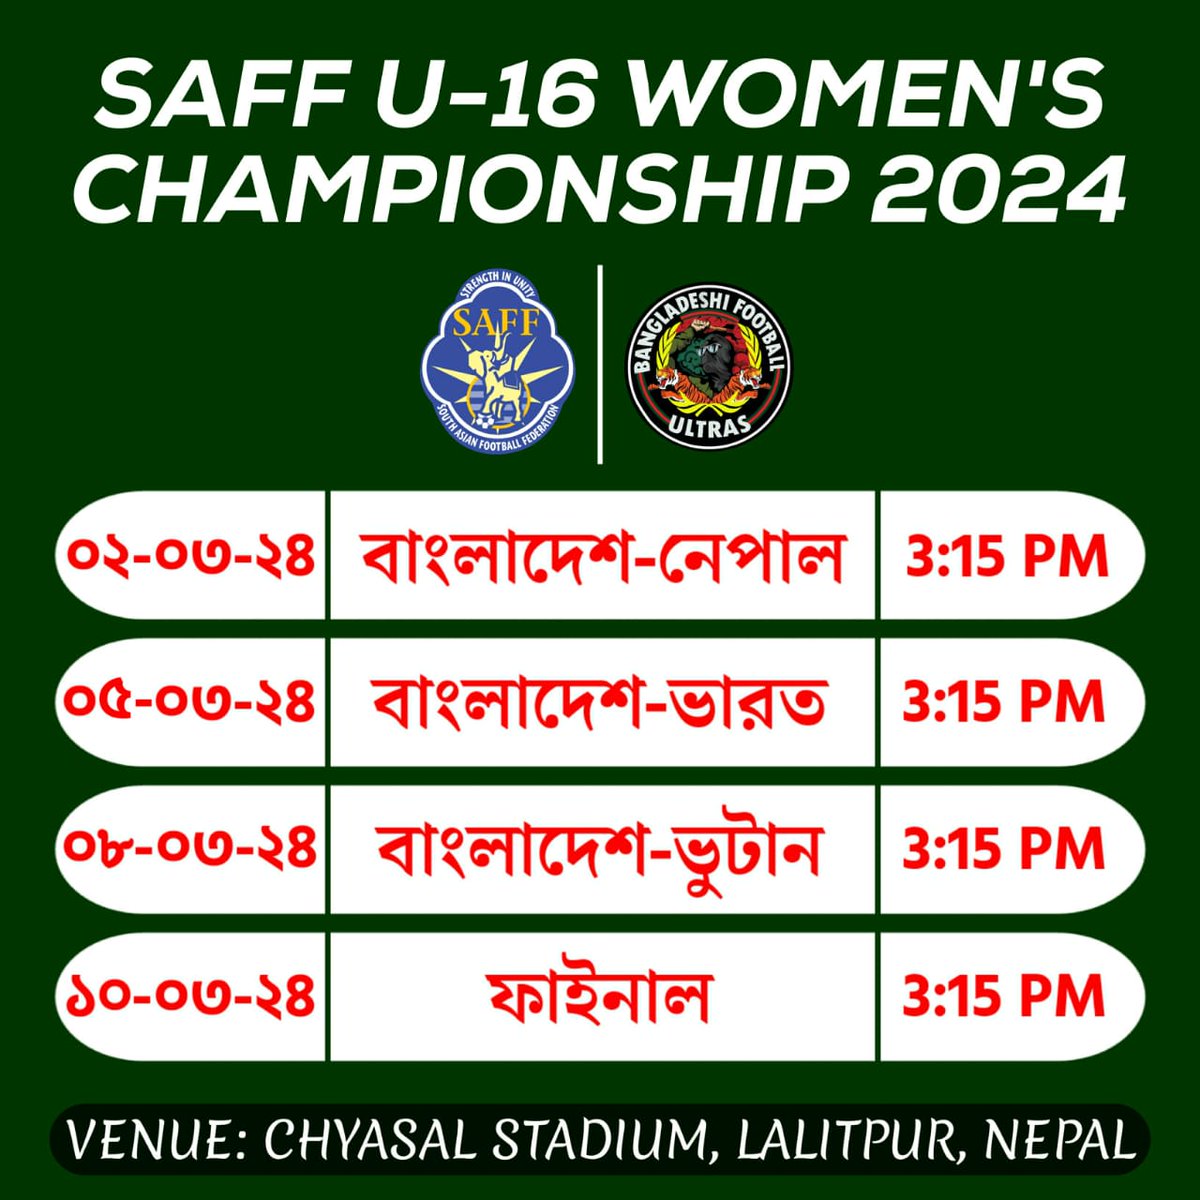 𝗪𝗼𝗺𝗲𝗻'𝘀 𝗨-𝟭𝟲 𝗠𝗮𝘁𝗰𝗵 𝗦𝗰𝗵𝗲𝗱𝘂𝗹𝗲 📅

🏆 SAFF U-16 WOMENS CHAMPIONSHIP 2024
🏟️ Chyasal Stadium Lalitpur, Nepal 

#BDultras #BangladeshiUltras #BFU #BornToRoar #Bangladesh #Ultras #TheBengalTigers #Ultrasian #আলট্রাসিয়ান